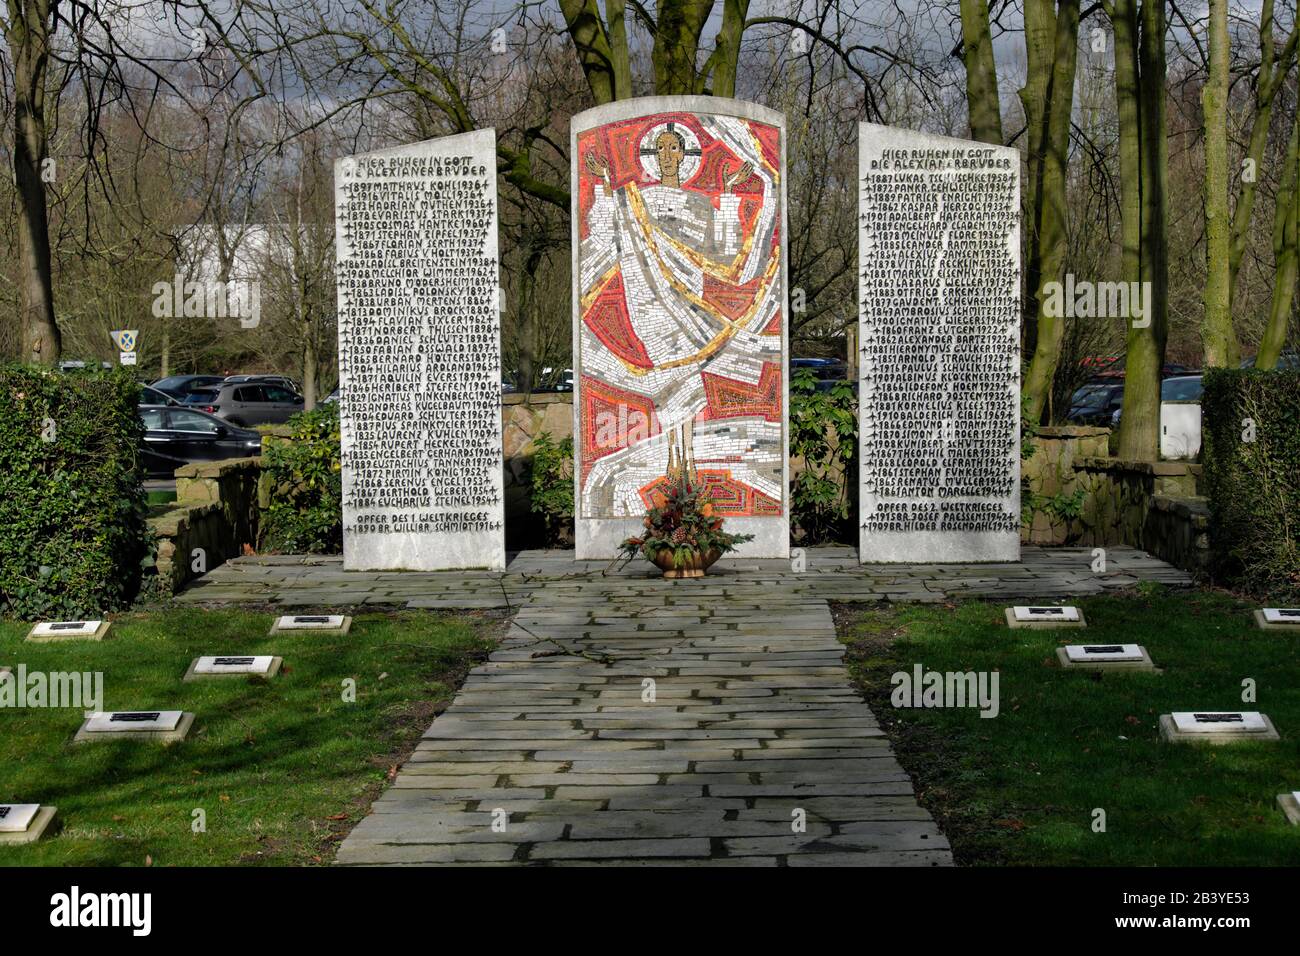 The Alexania Brothers cemetery in Krefeld, NRW, Germany Stock Photo